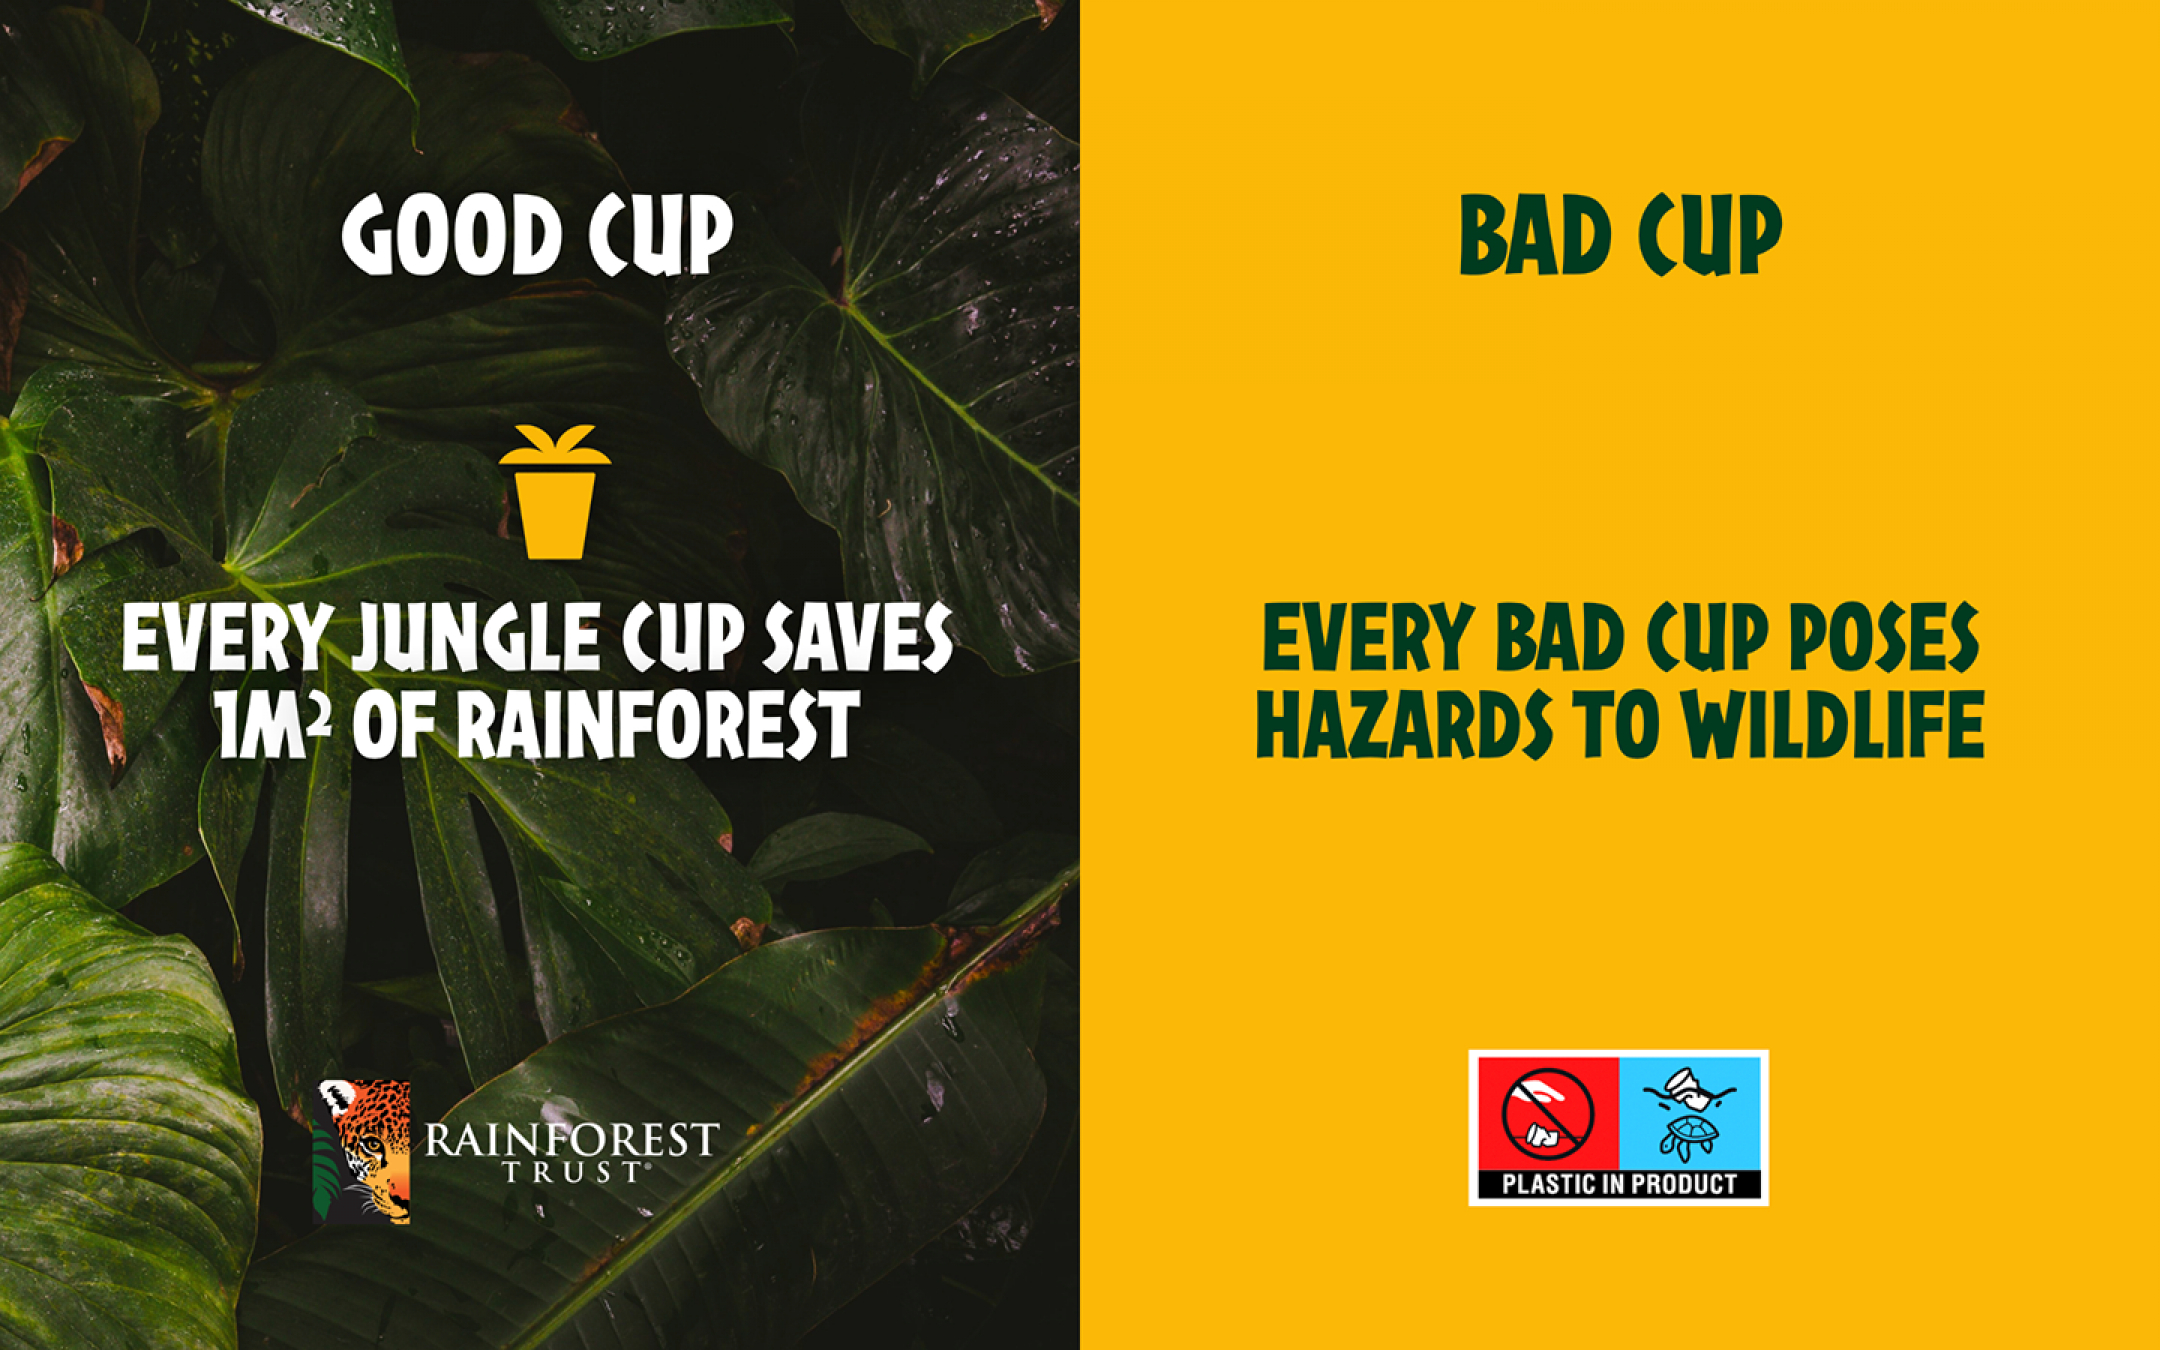 Jungle Cup®